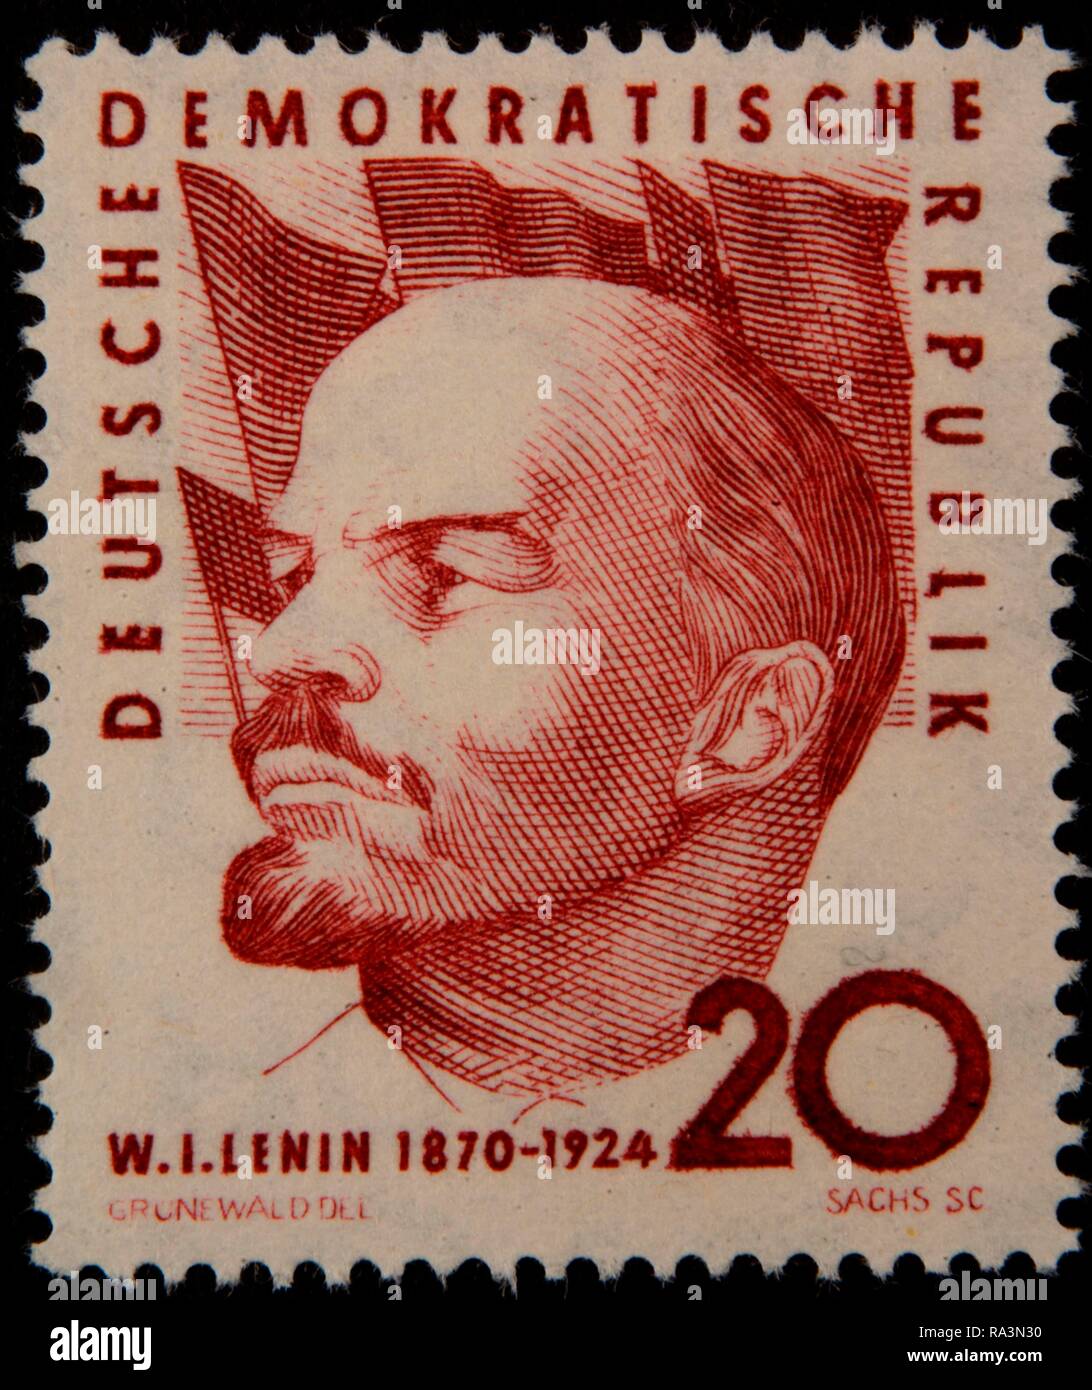 Vladimir Ilyich Ulyanov Lenin, a Russian communist revolutionary, politician, and political theorist, portrait on a German stamp Stock Photo